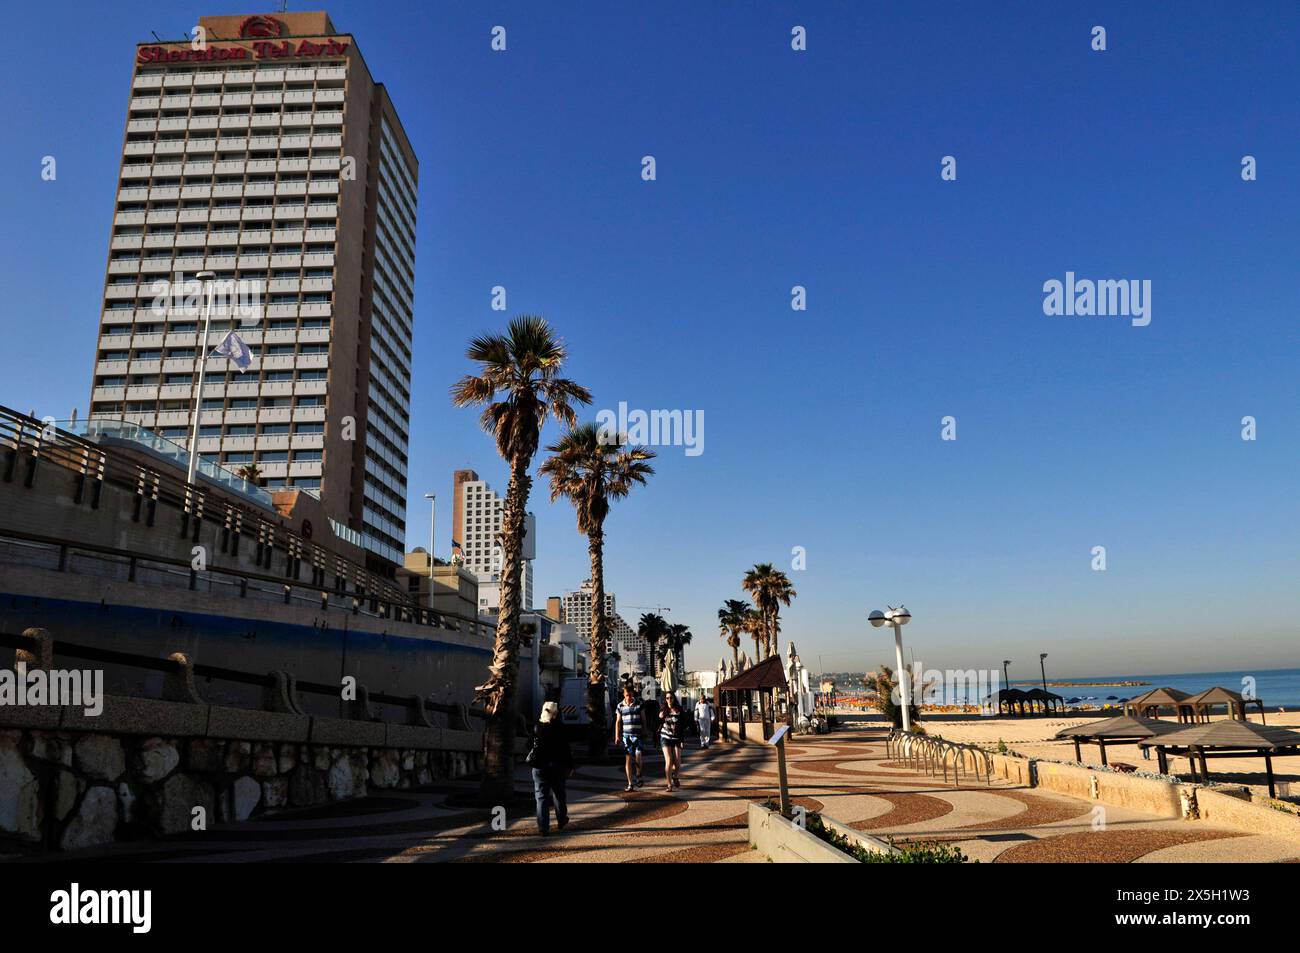 The seafront promenade in Tel-Aviv, Israel. Stock Photo